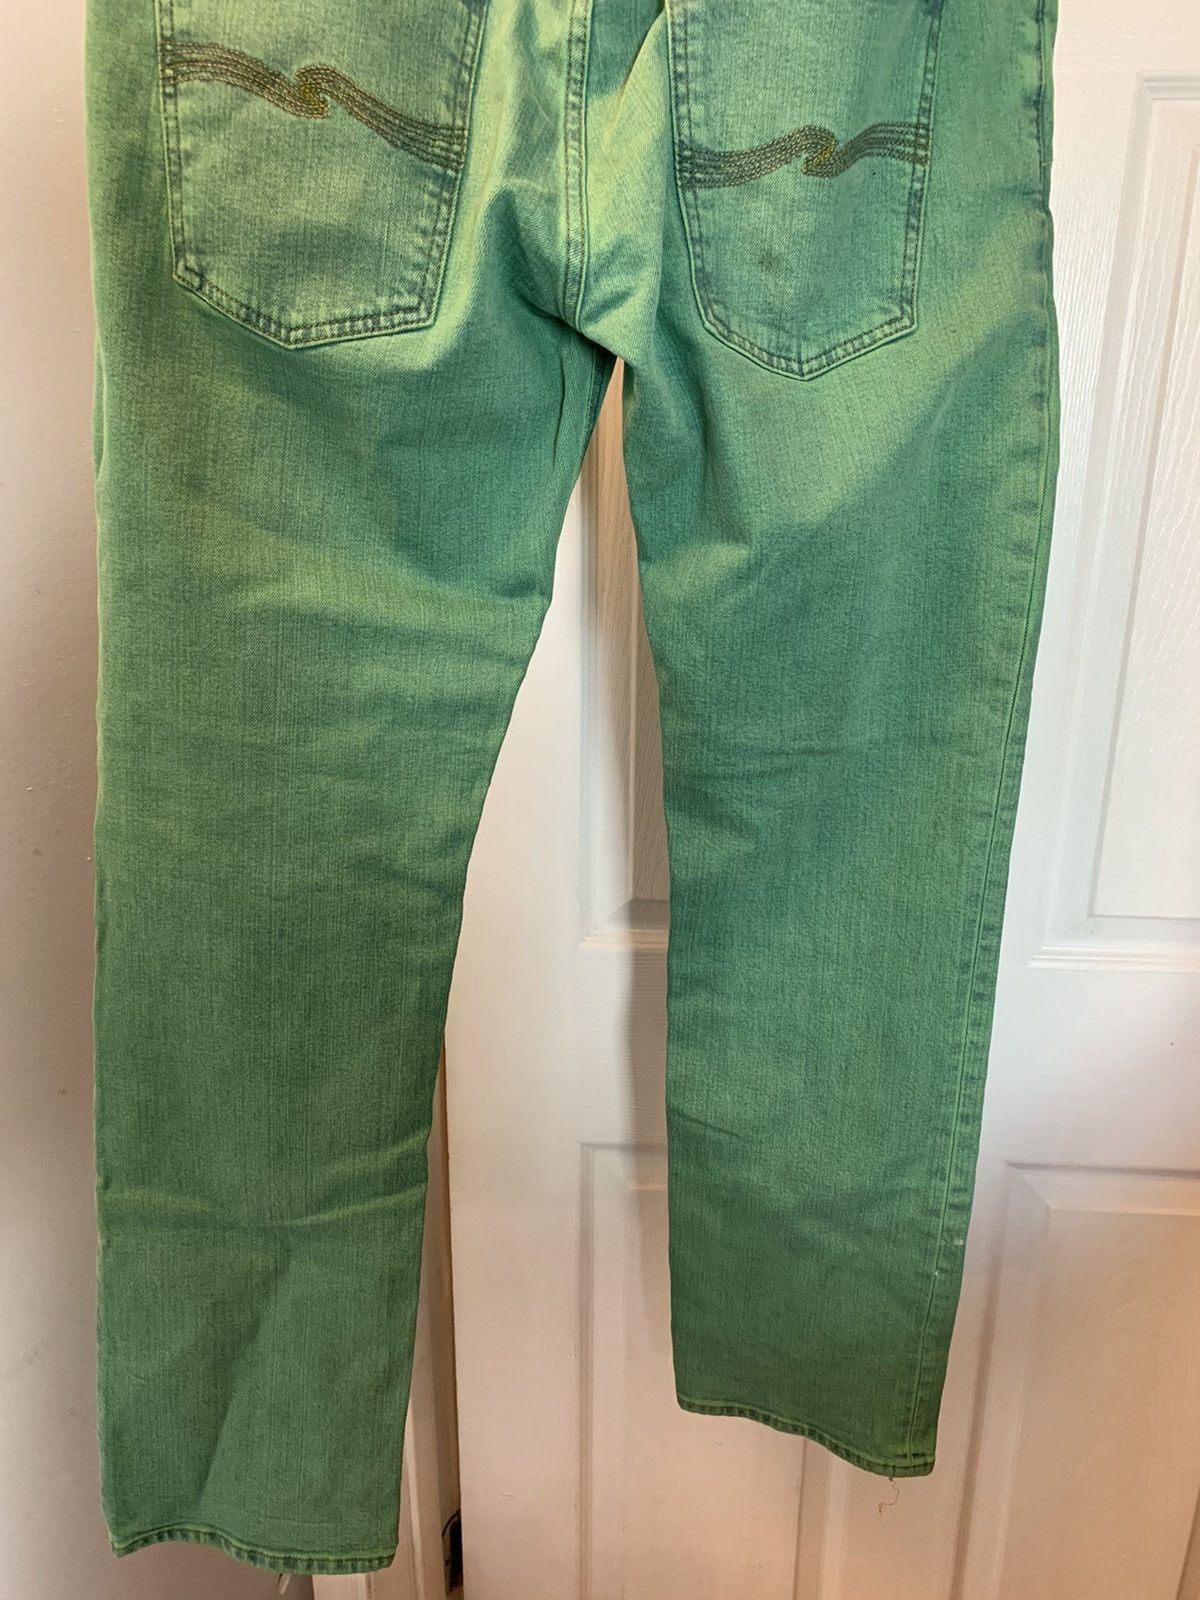 Nudie Jeans Nudie Jeans Green Denim Straight Jeans Size US 36 / EU 52 - 7 Thumbnail